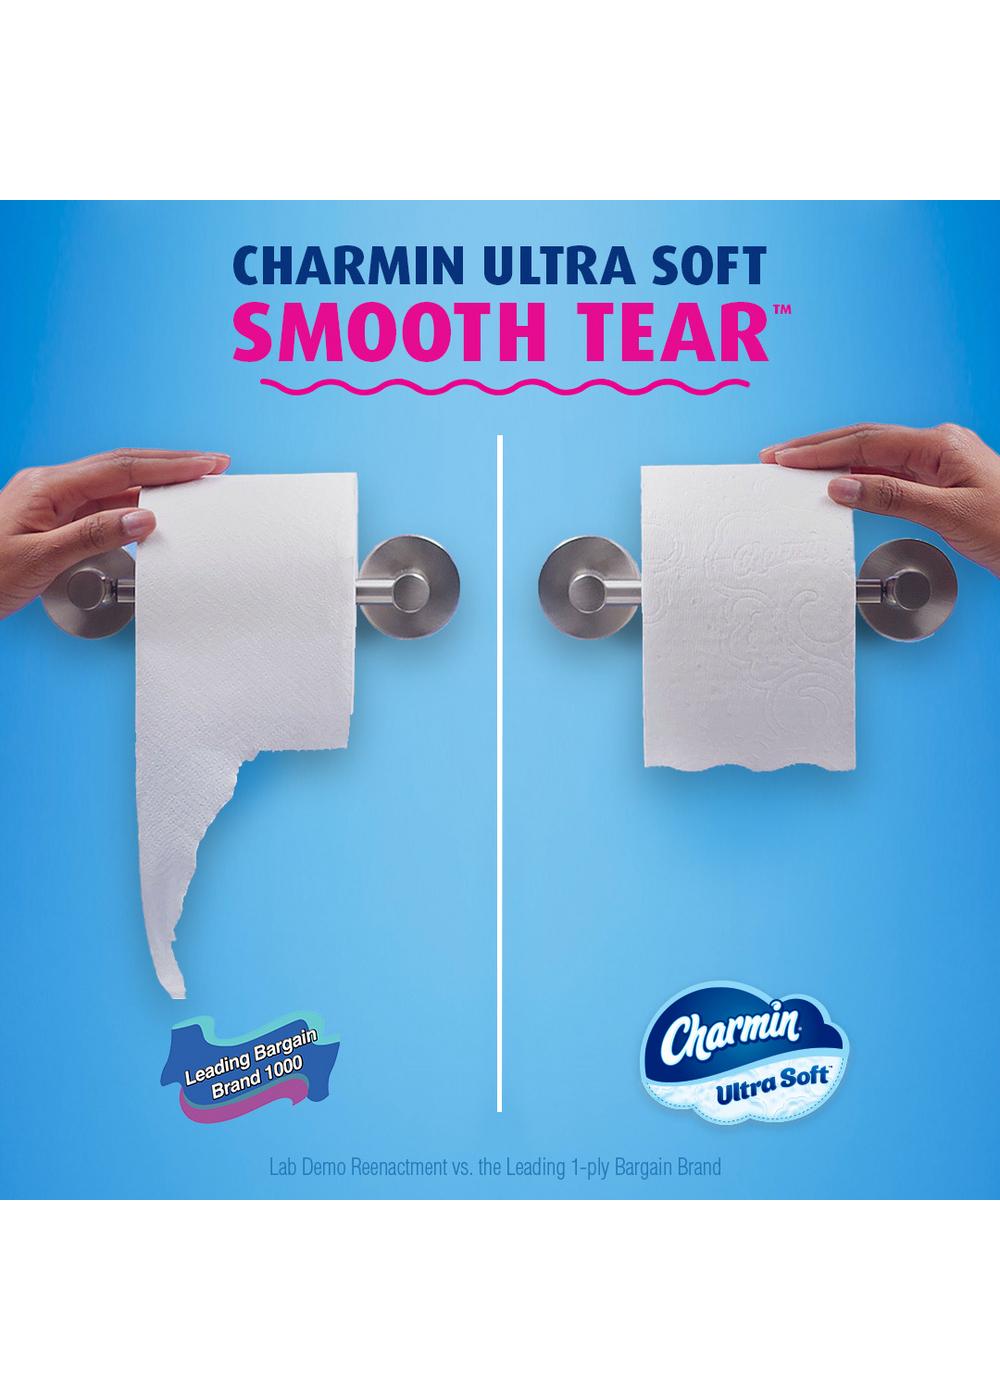 Charmin Ultra Soft Toilet Paper - Shop Toilet Paper at H-E-B